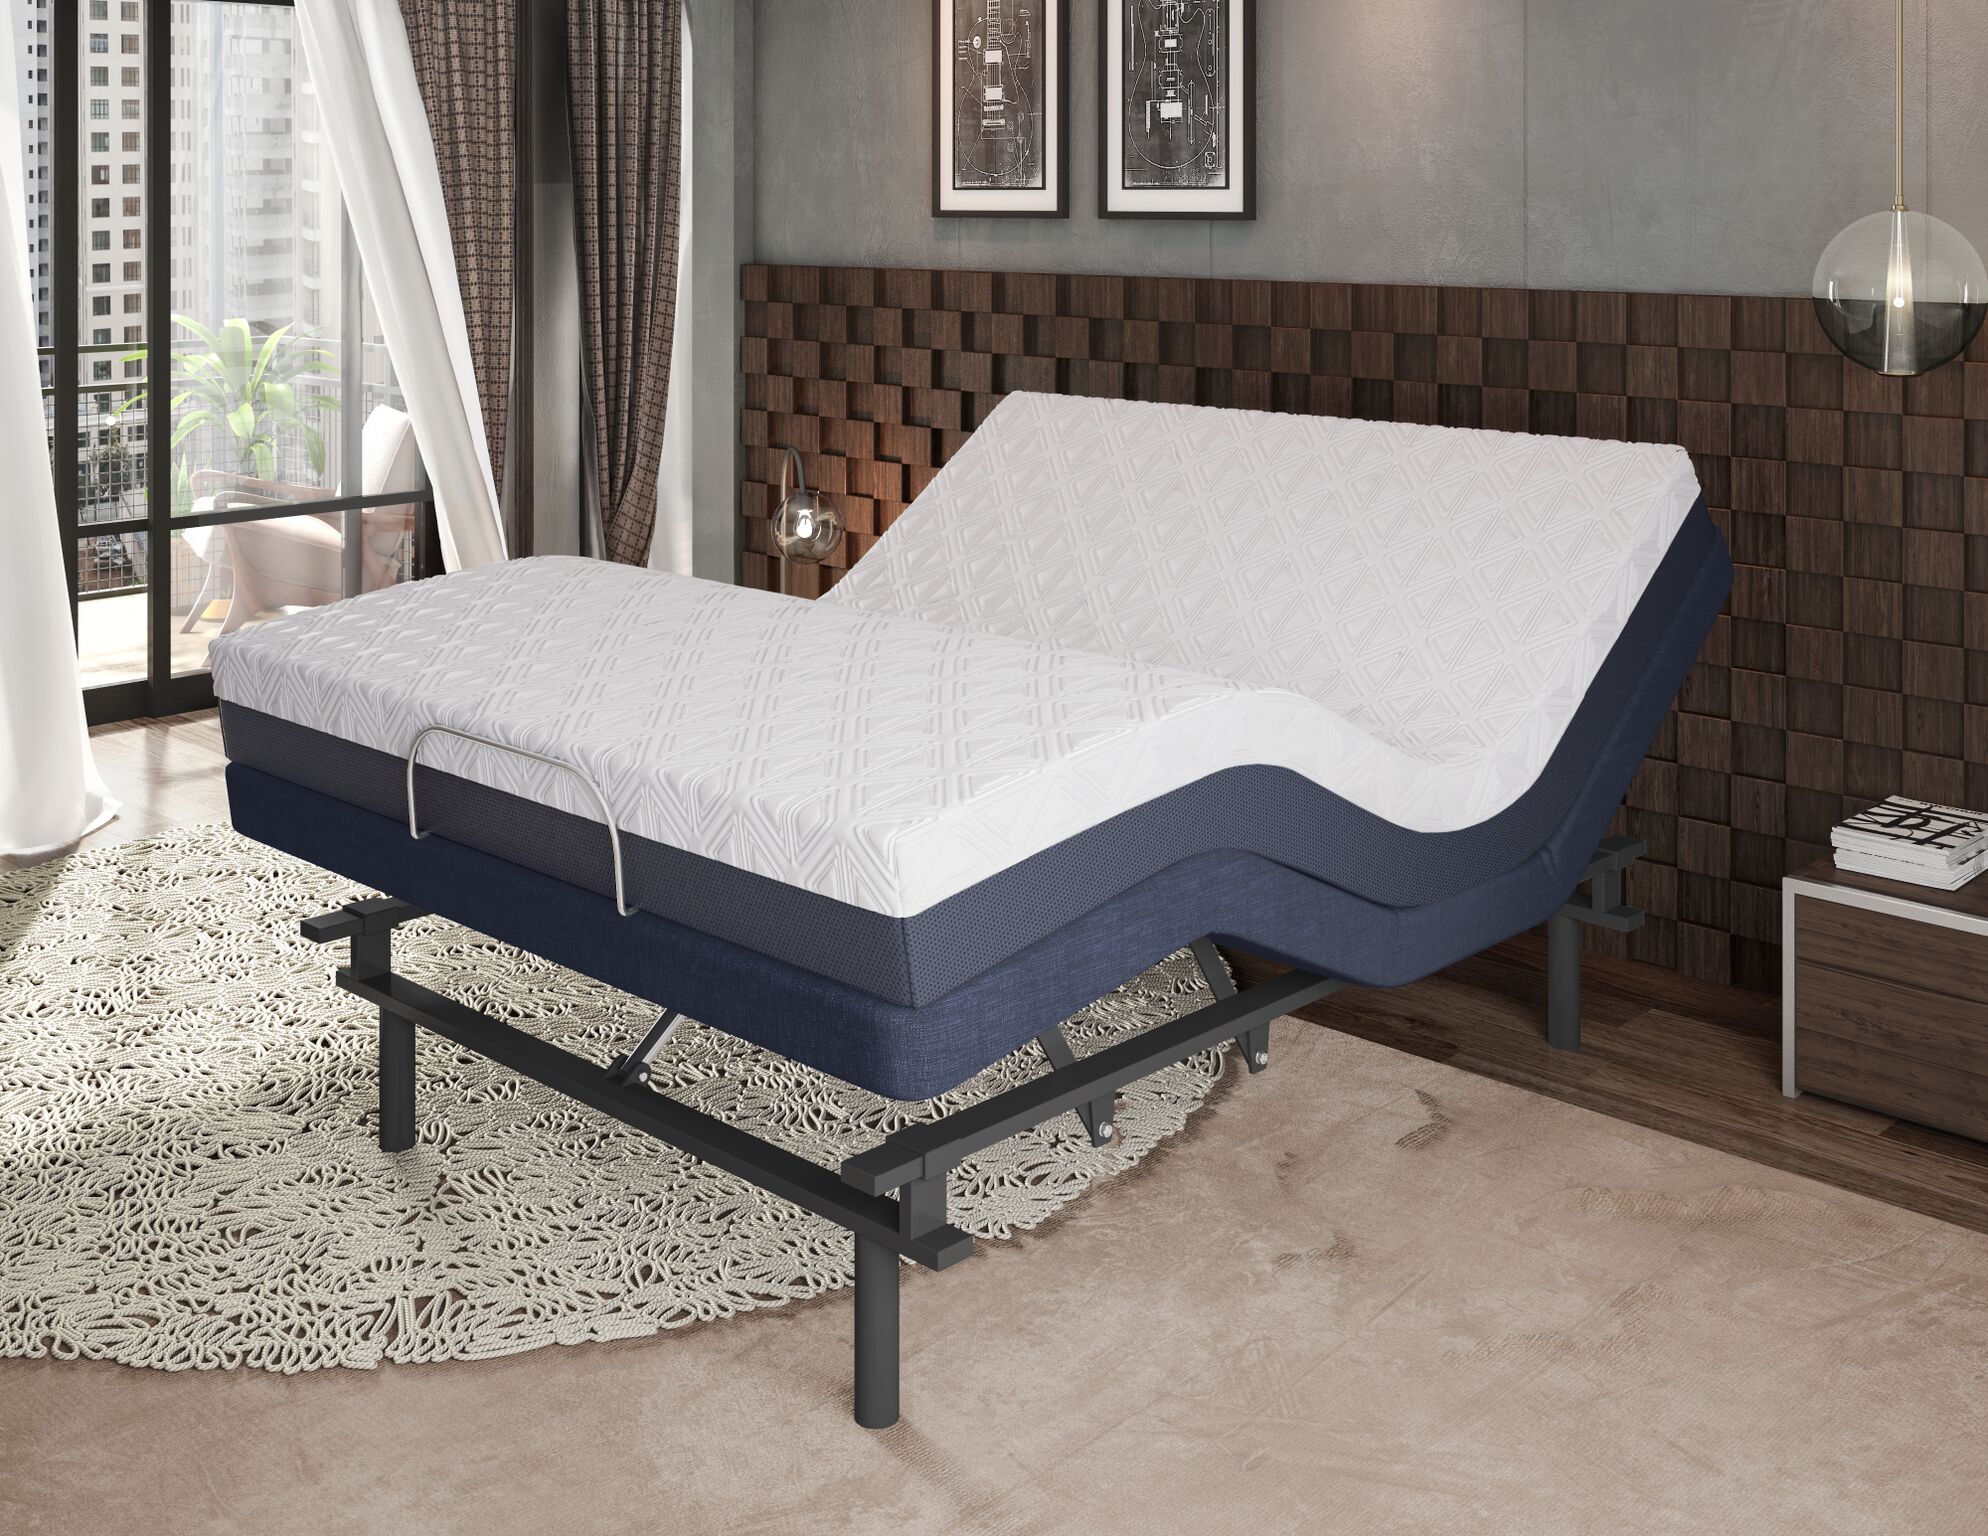 bed mattresses haul away boise idaho